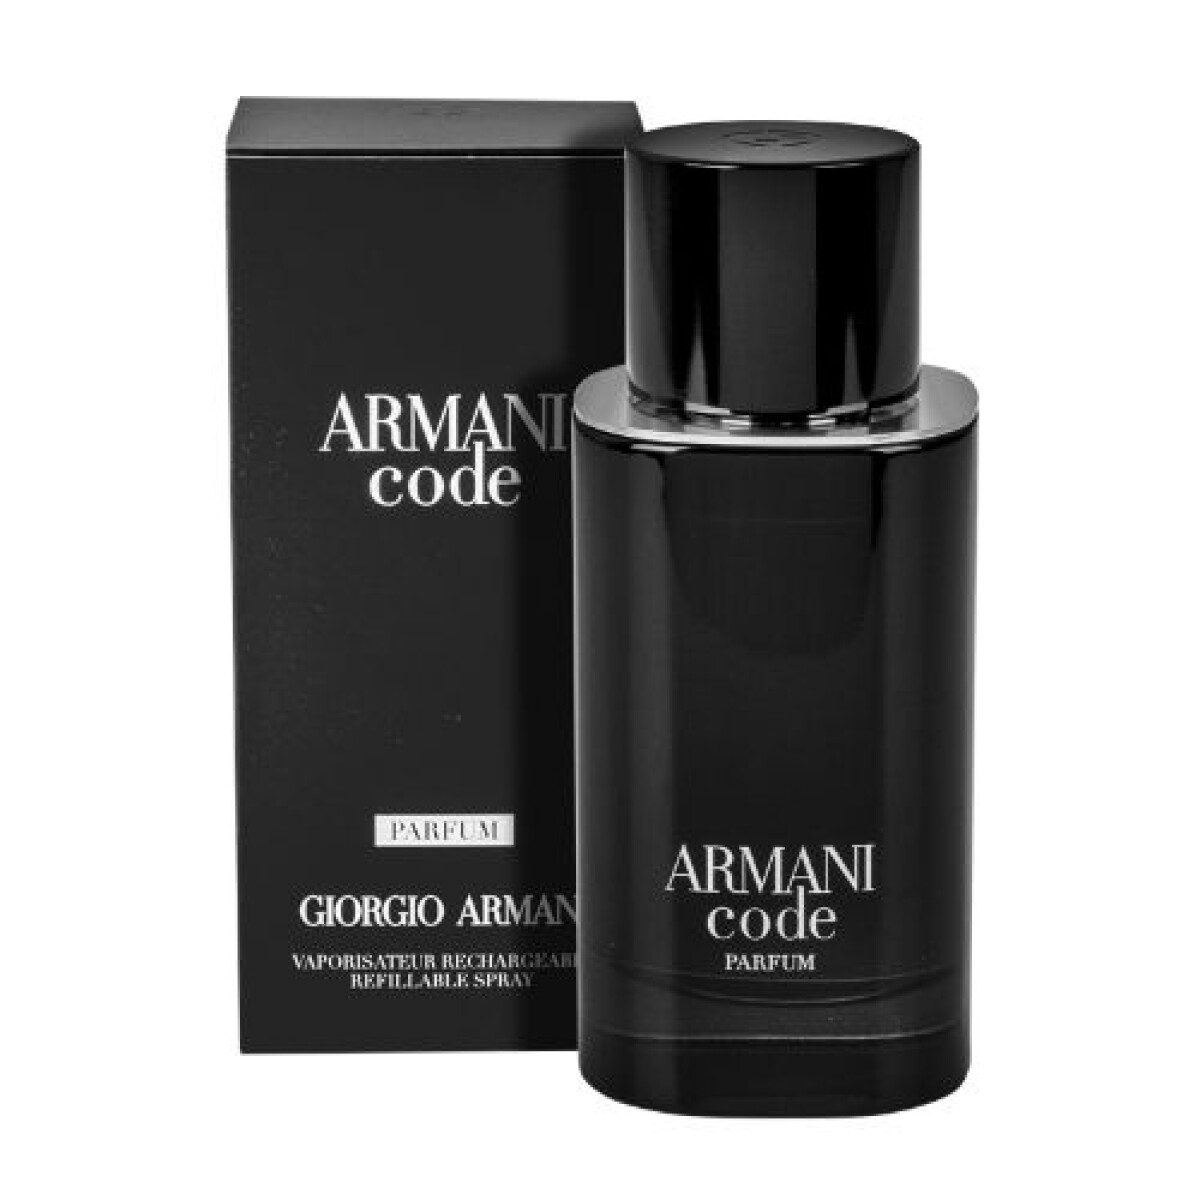 Giorgio Armani Code parfum - 75 ml 